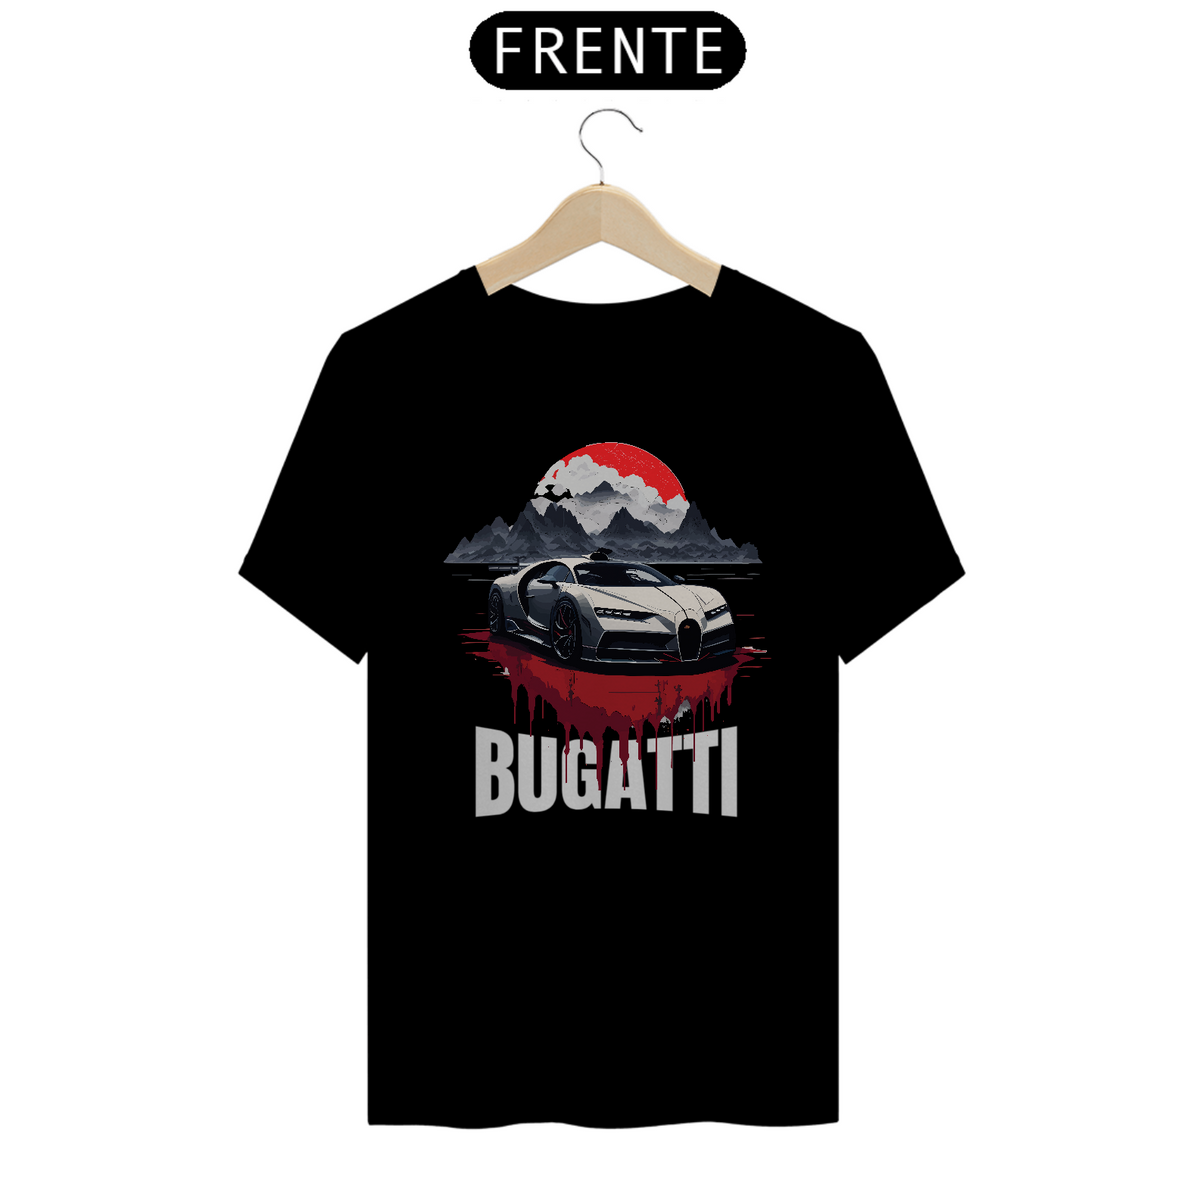 Nome do produto: Bugatti - Tóquio